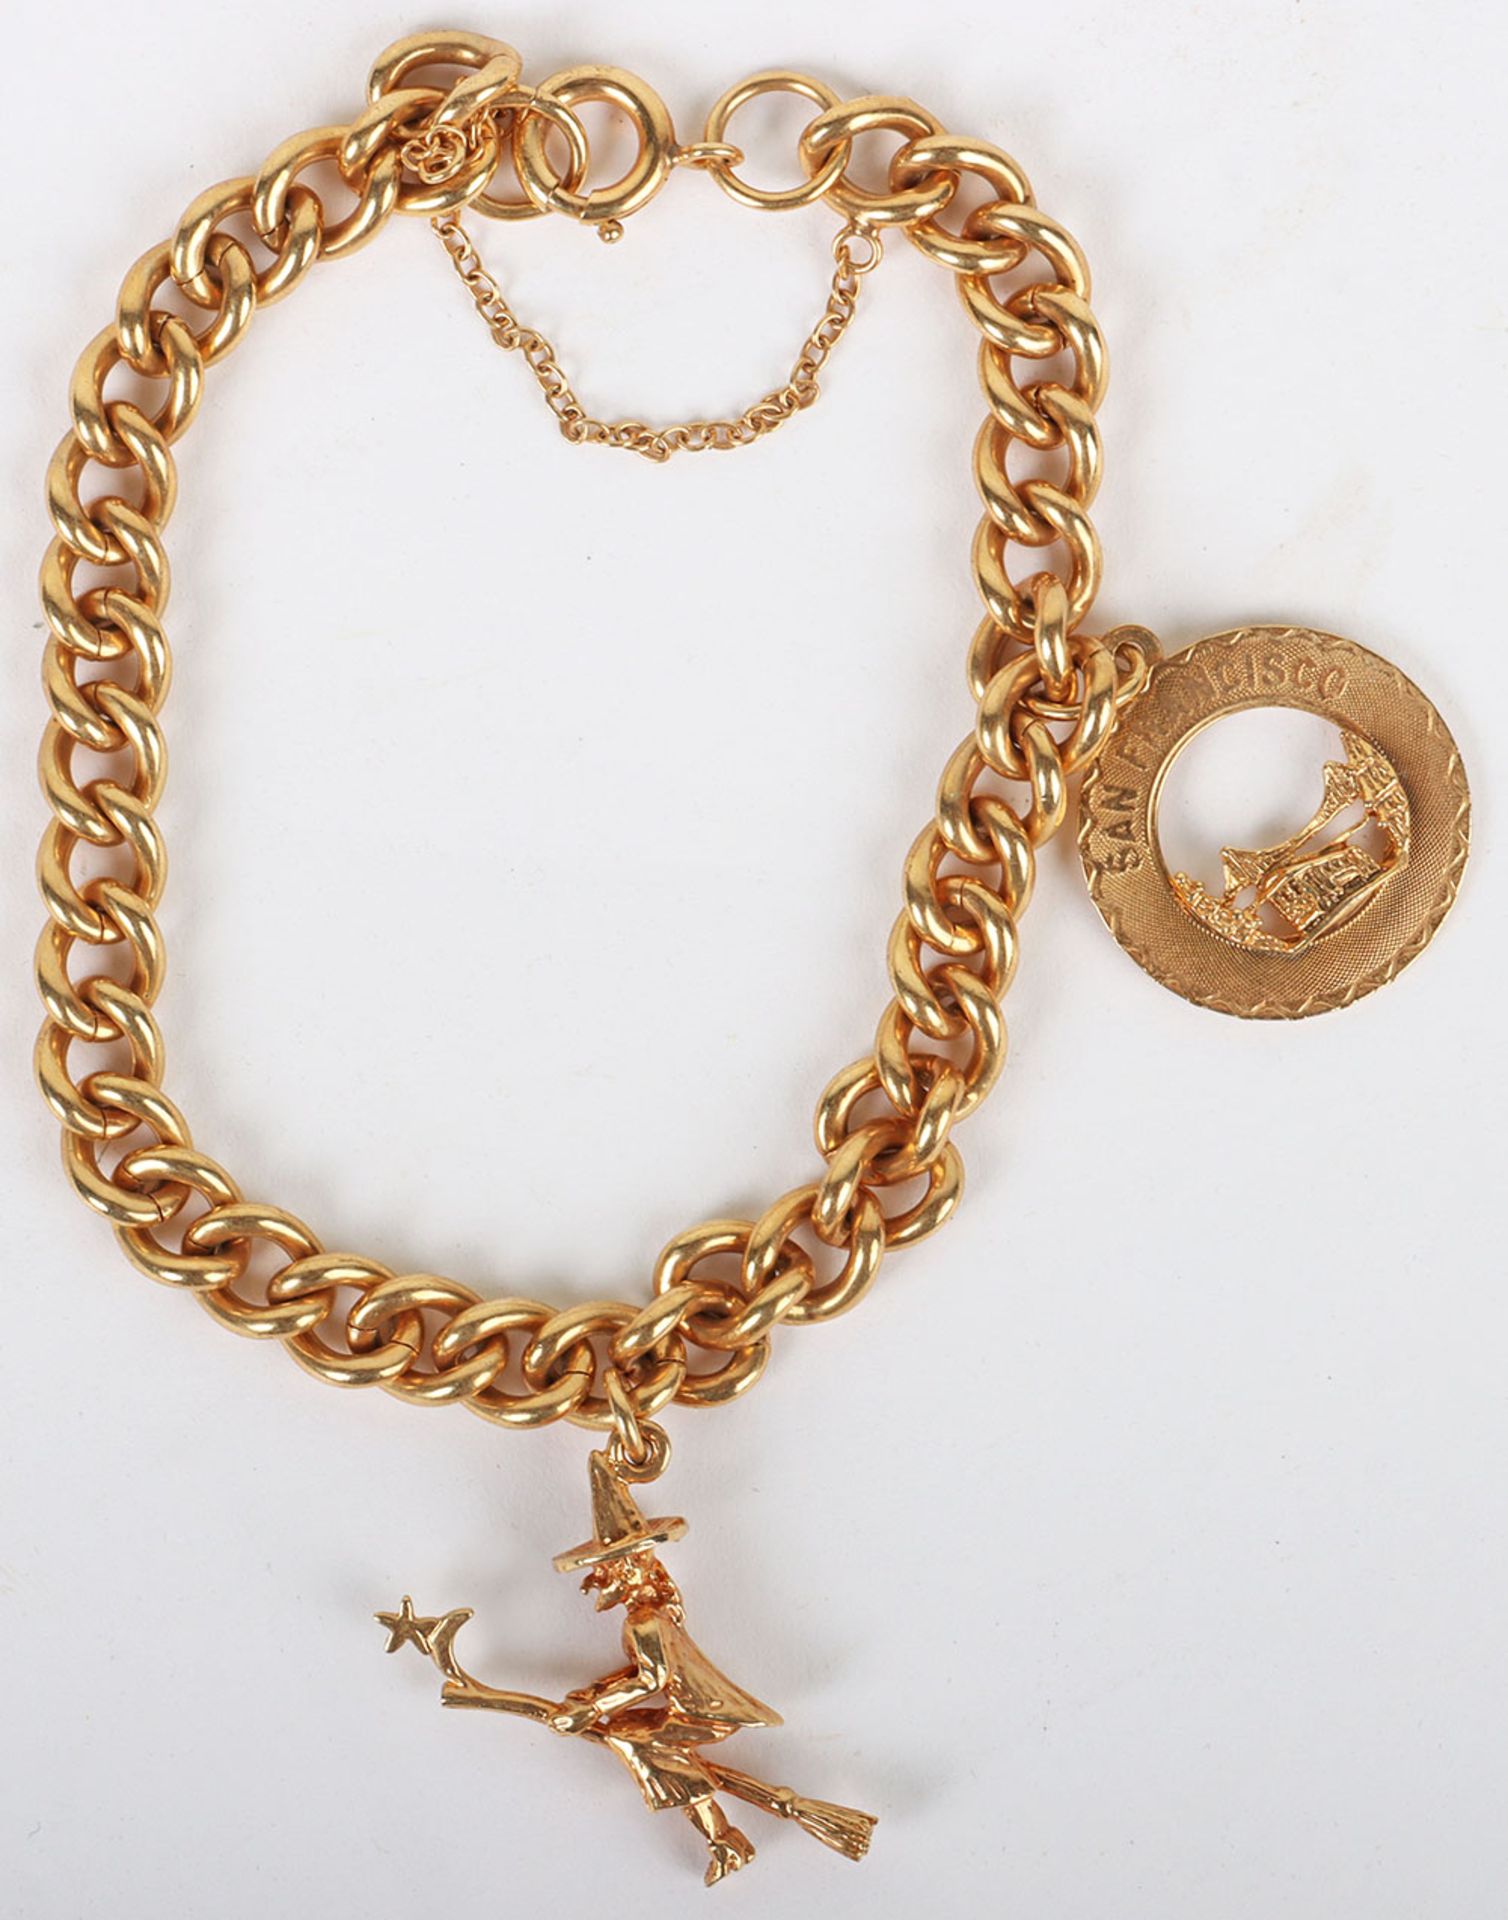 A 9t gold charm bracelet - Image 4 of 6